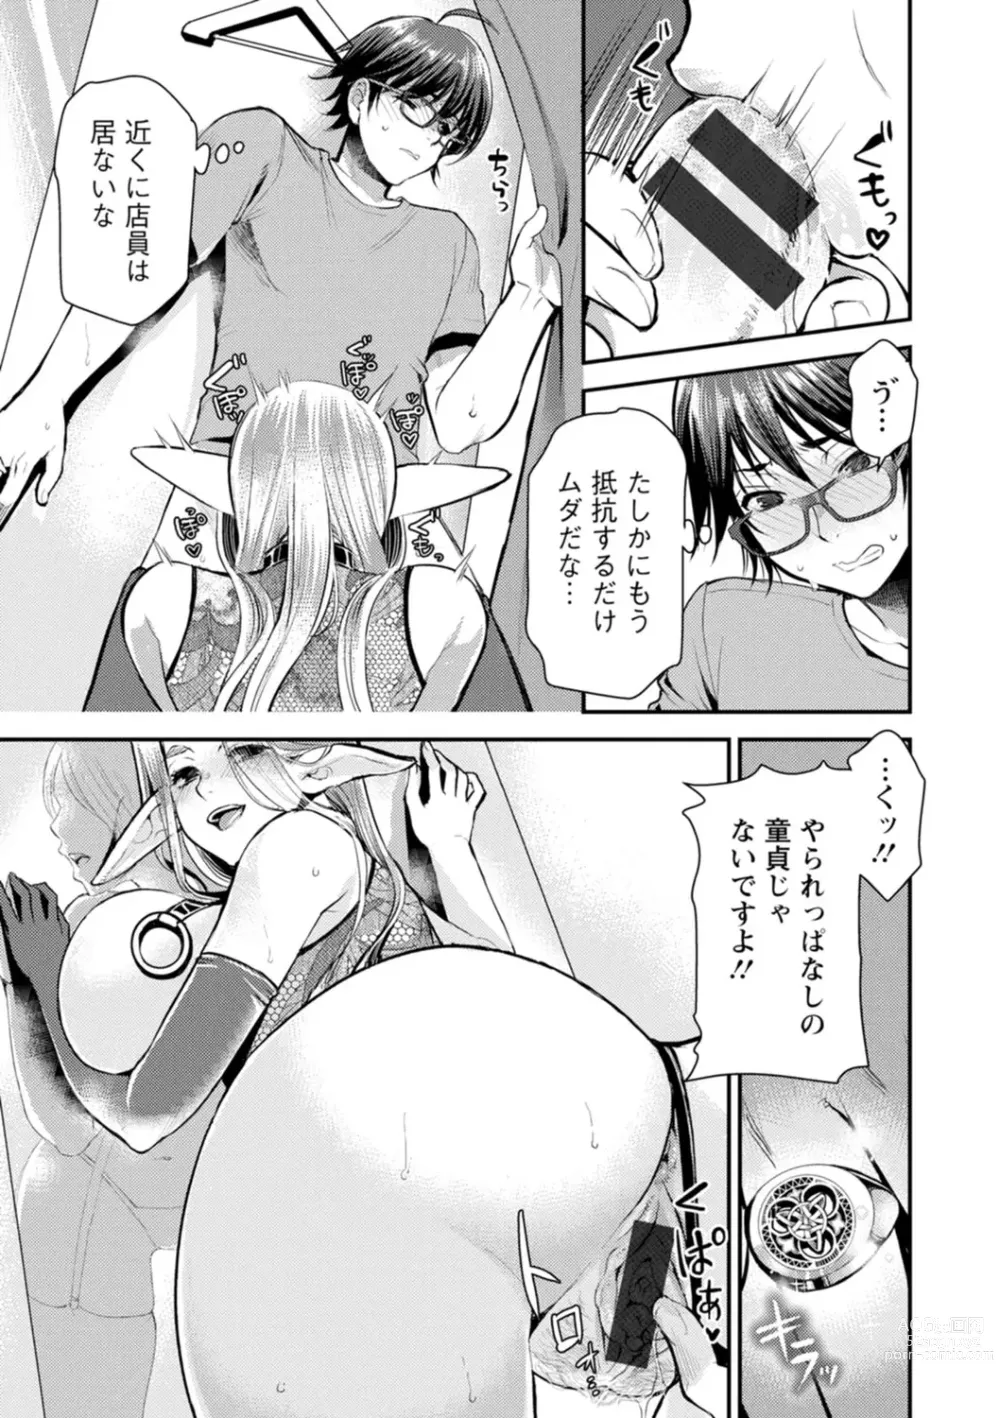 Page 185 of manga Sex x Meshi